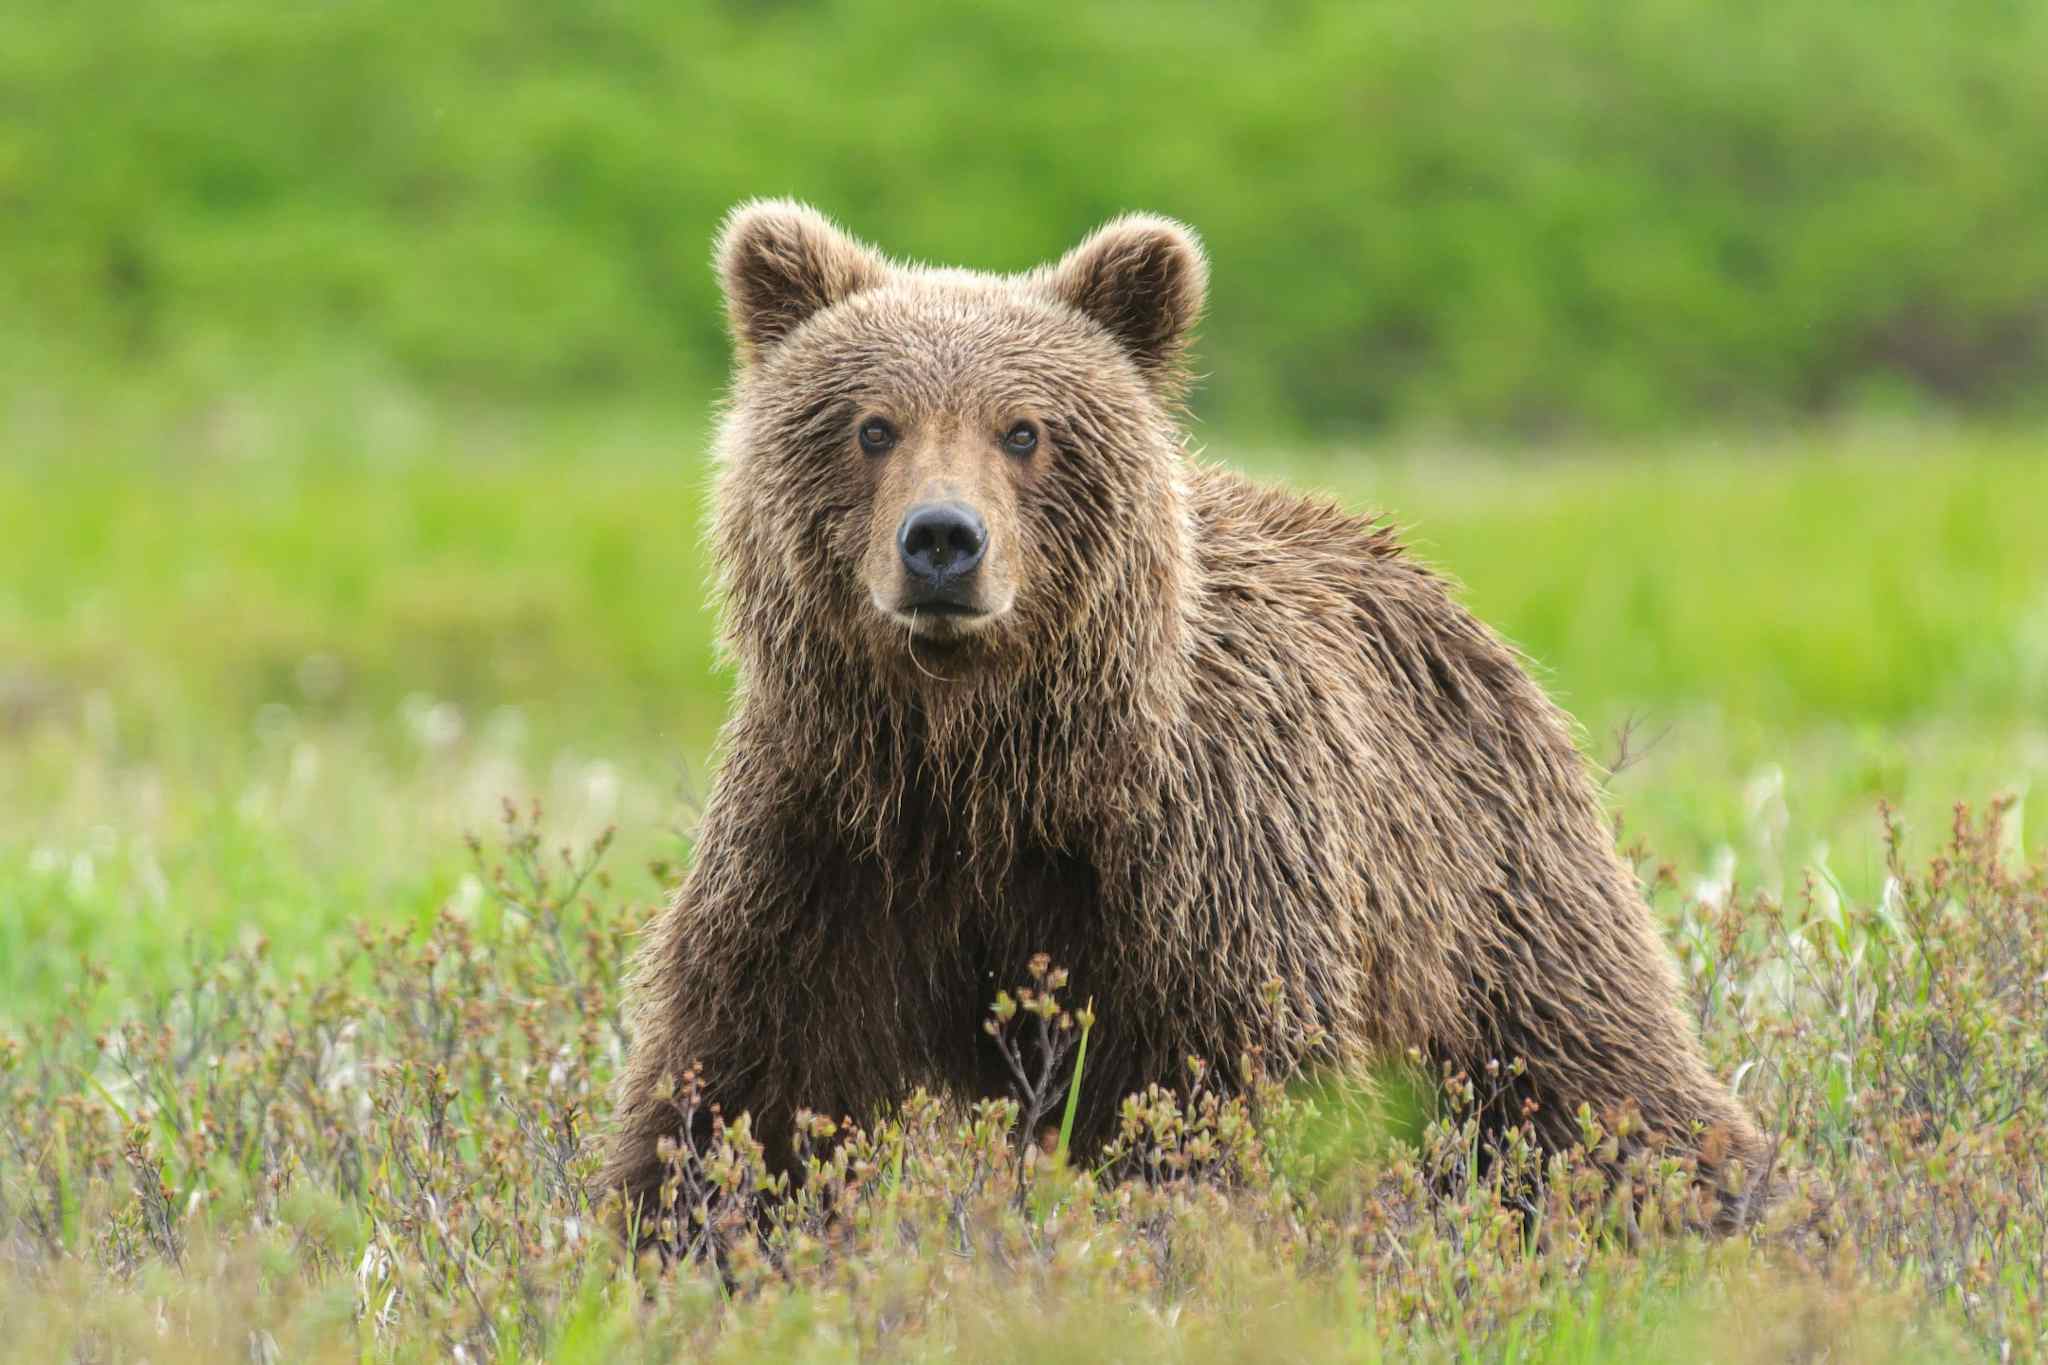 Grizzly Bear, Alaska, USA
https://www.canva.com/photos/MAEECjuQfT4-brown-bear-close-up-in-green-sedge-field/